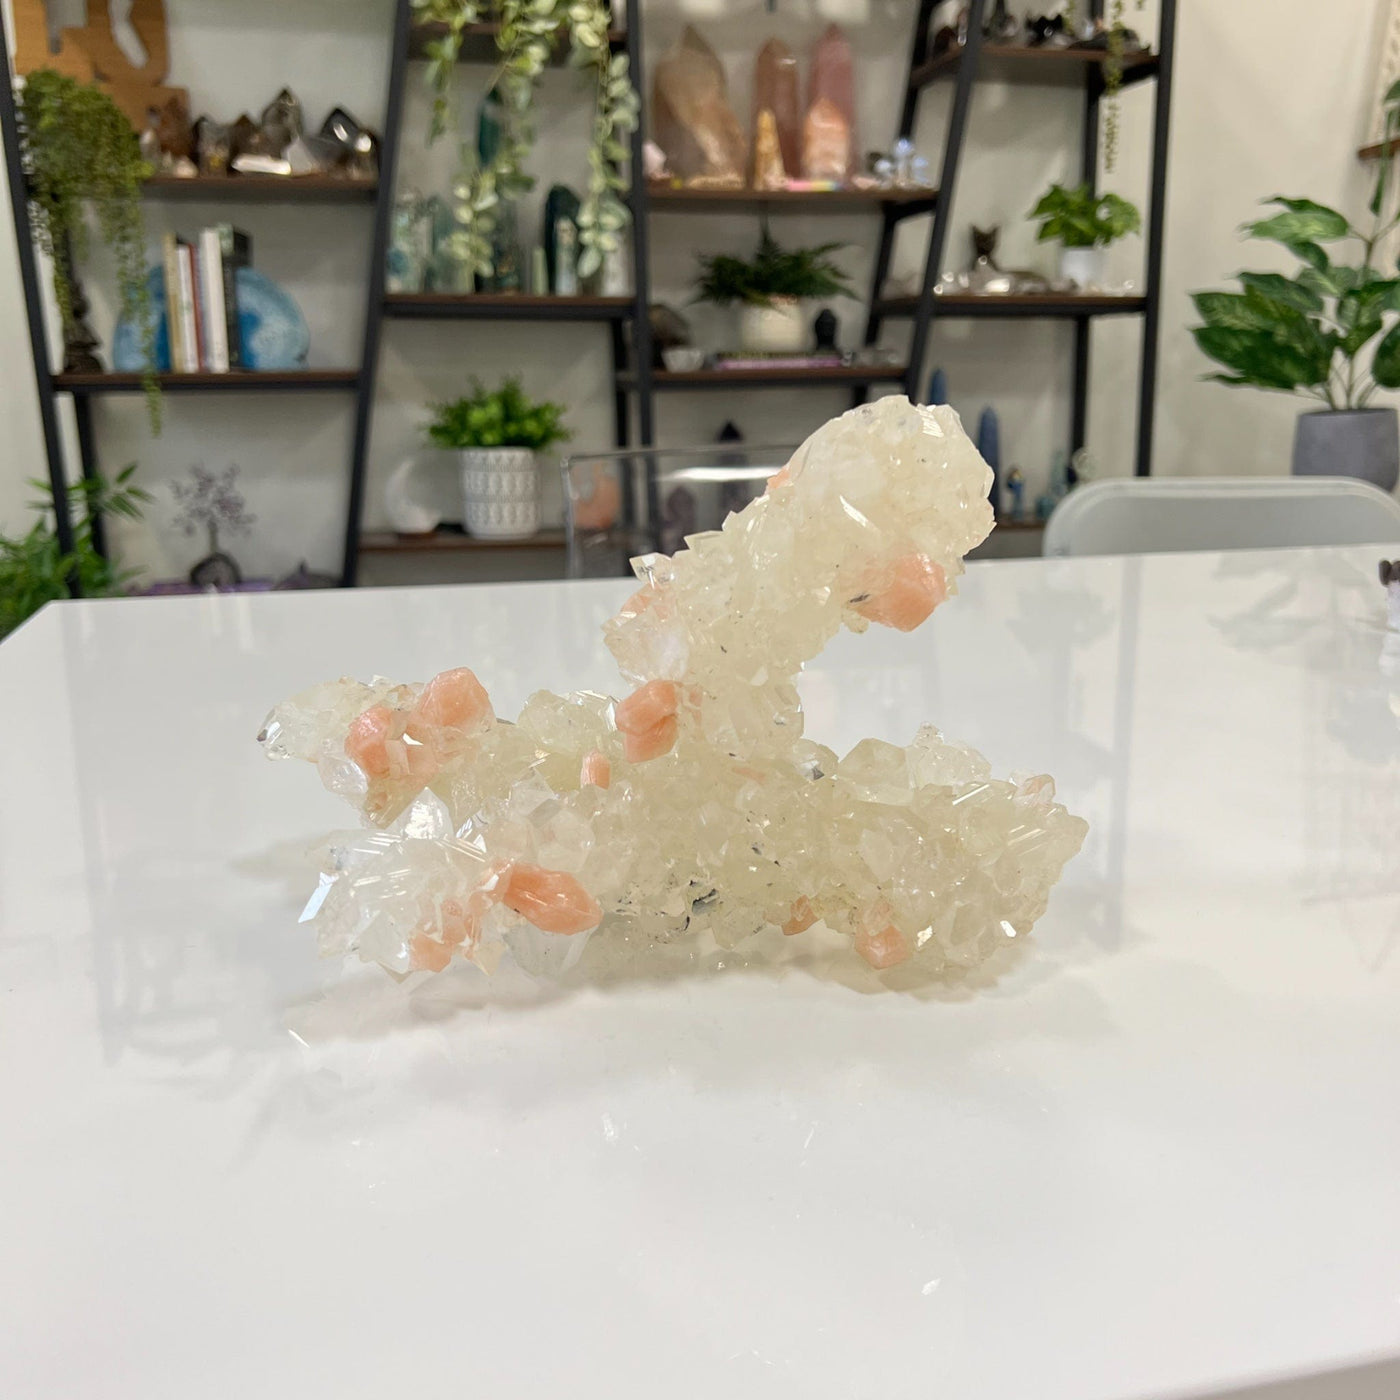 Apophyllite with Peach stilbite cluster on a white table.